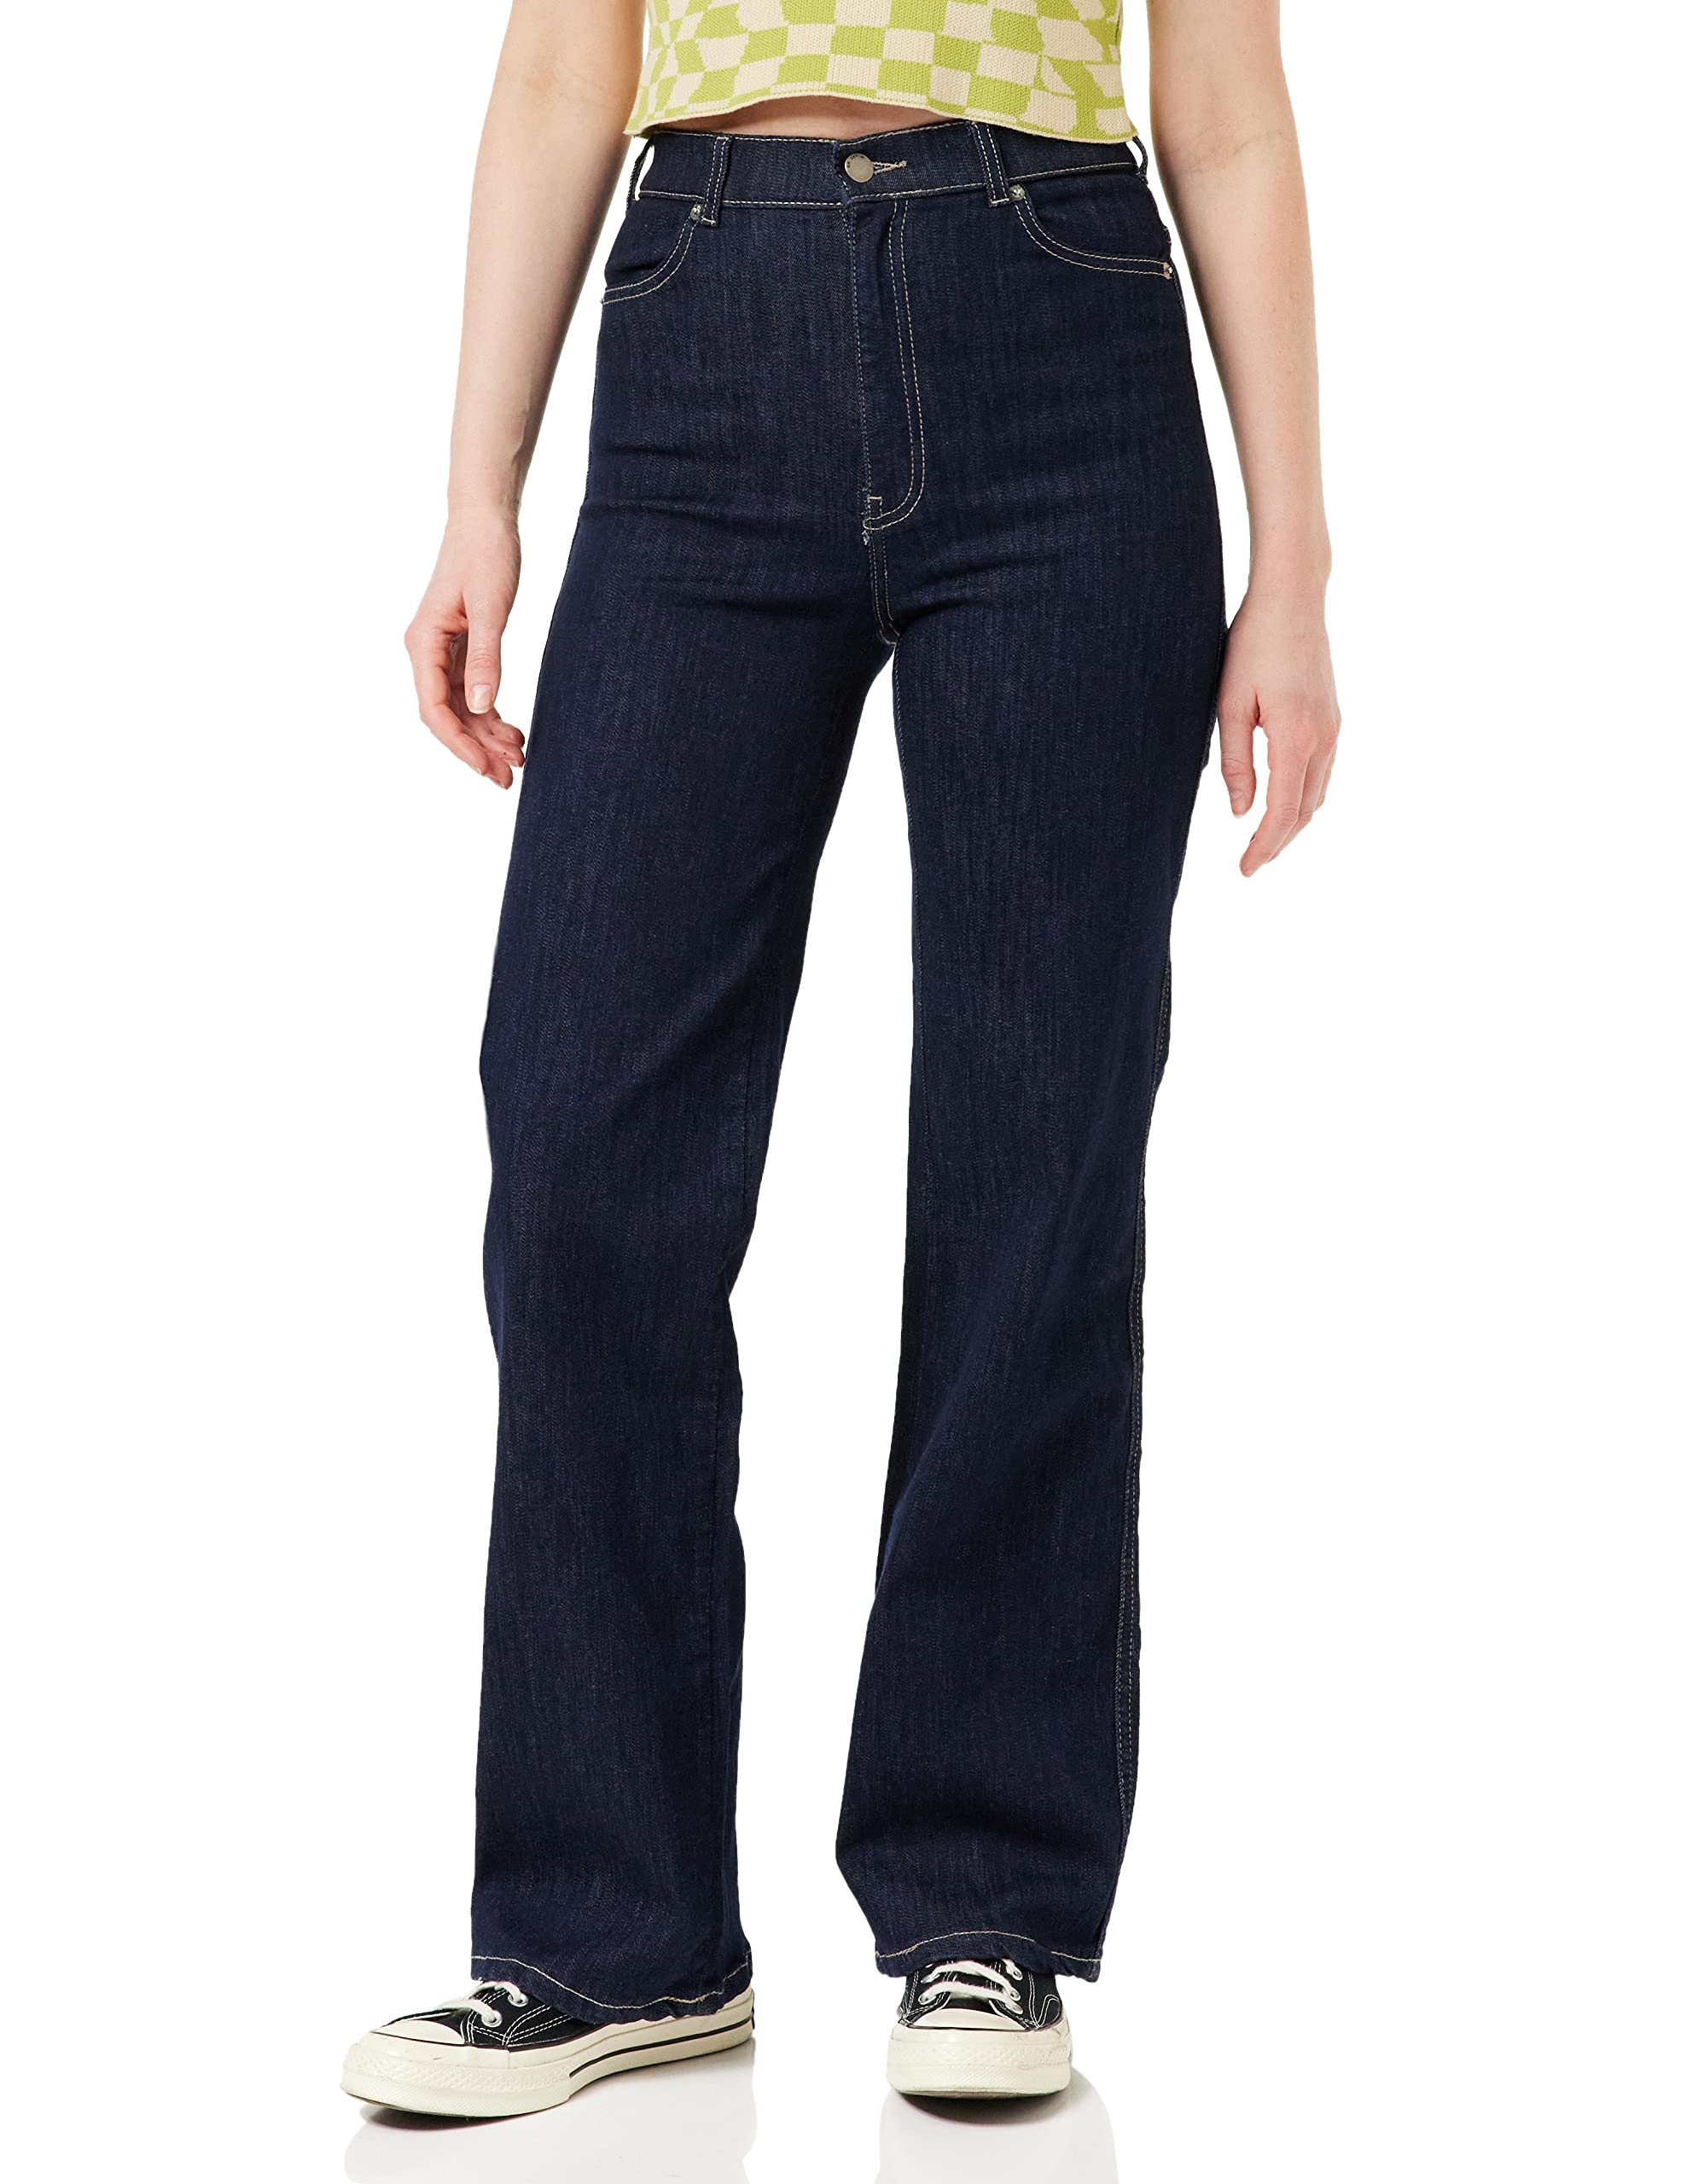 Dr Denim Damen Moxy Straight Jeans, Pyke Blue Rinse, M/34